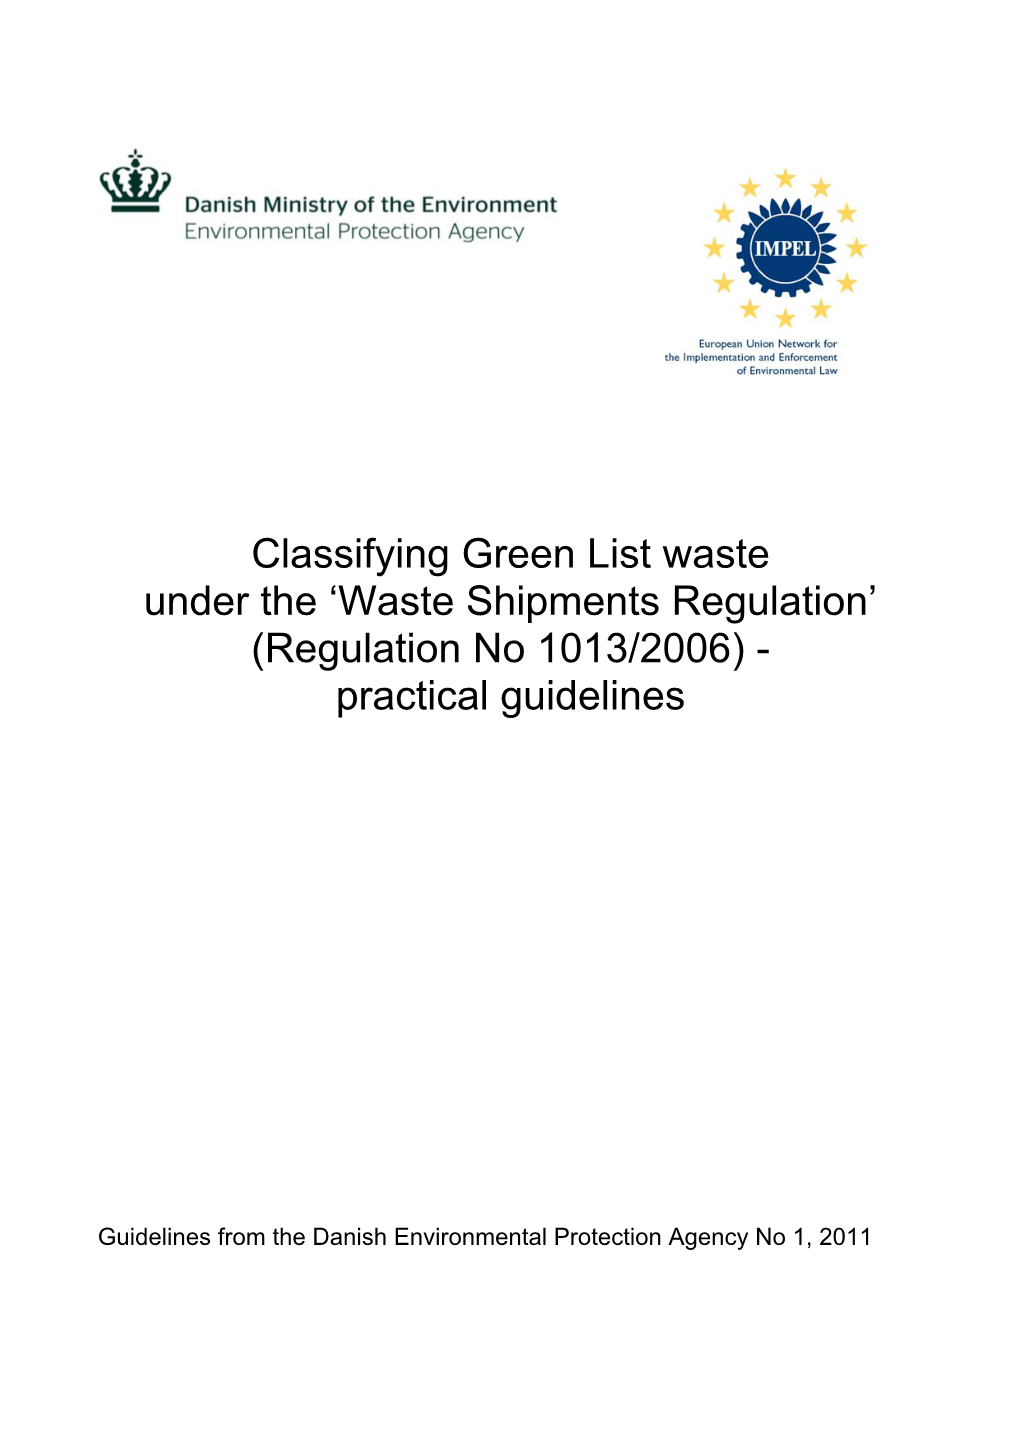 Classifying Green List Waste Under the ‘Waste Shipments Regulation’ (Regulation No 1013/2006) - Practical Guidelines